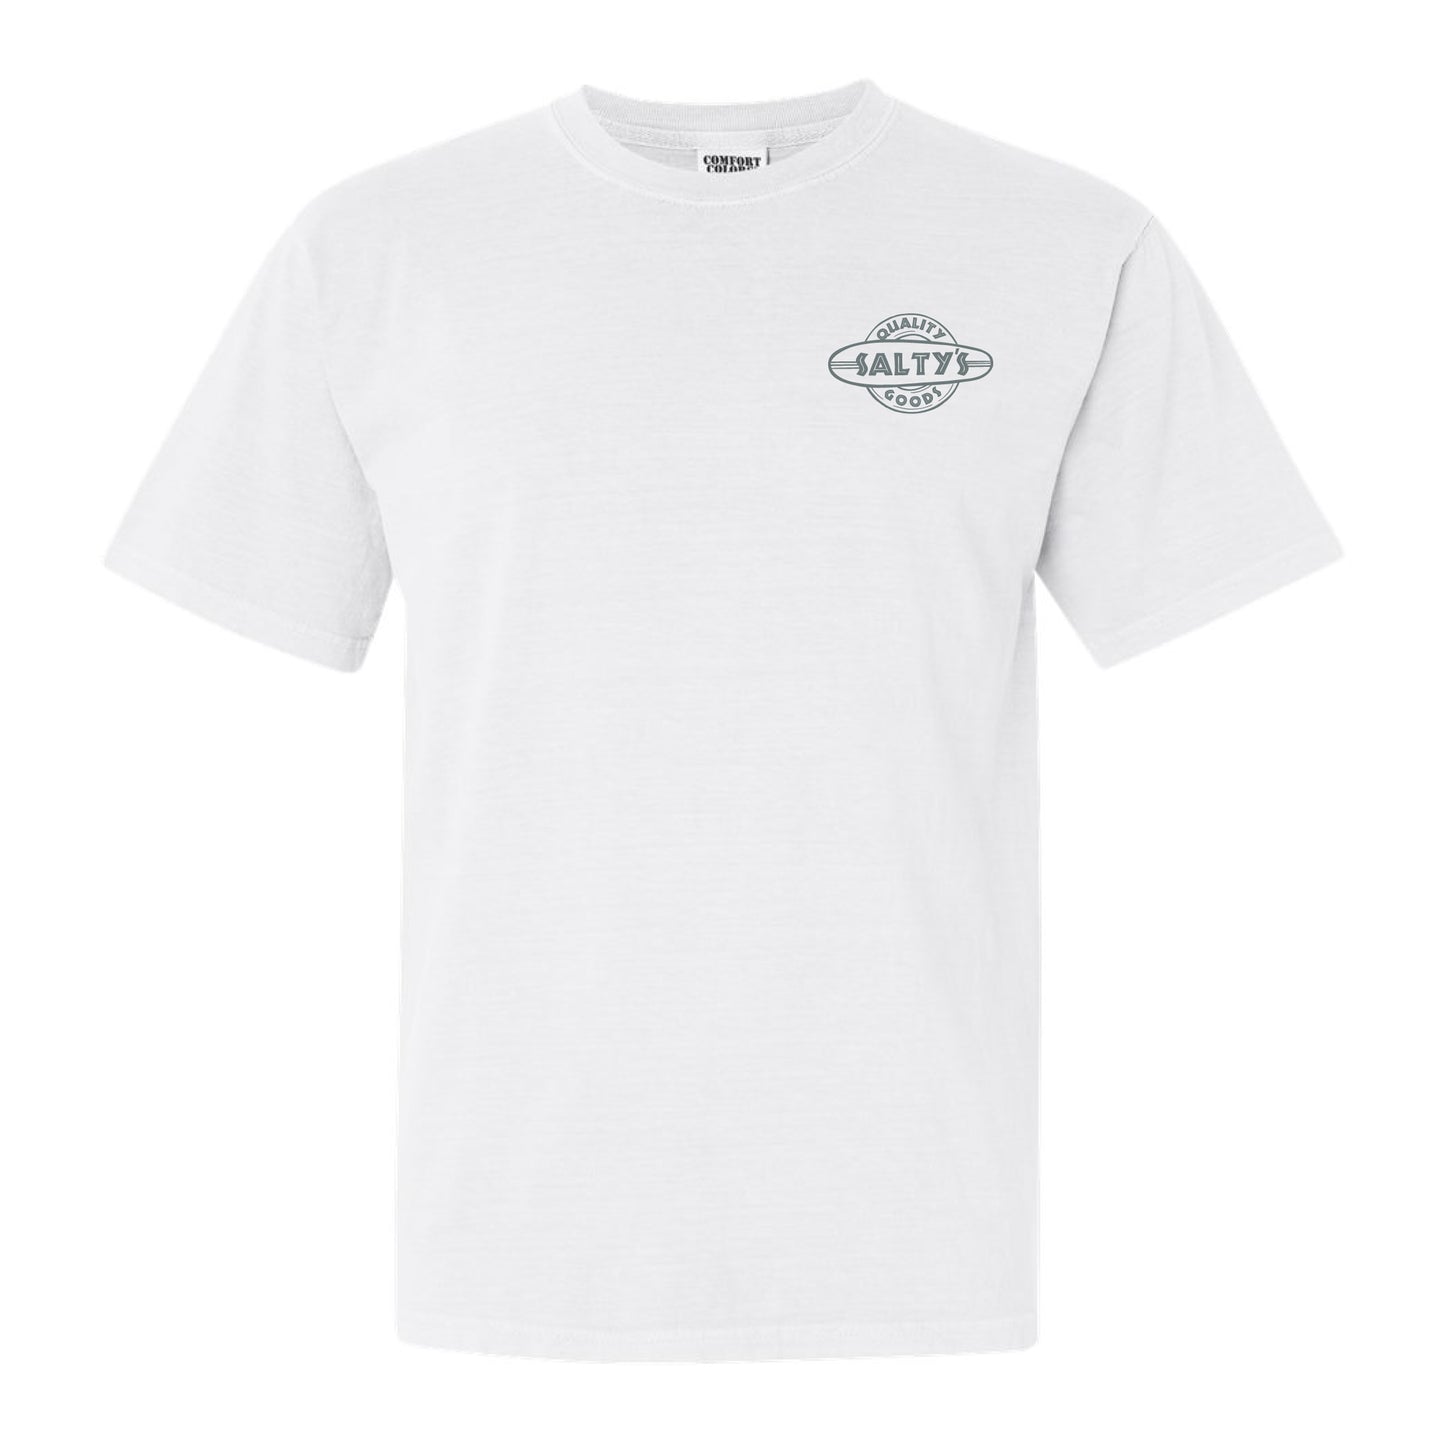 Redneck Yacht Club T-Shirt